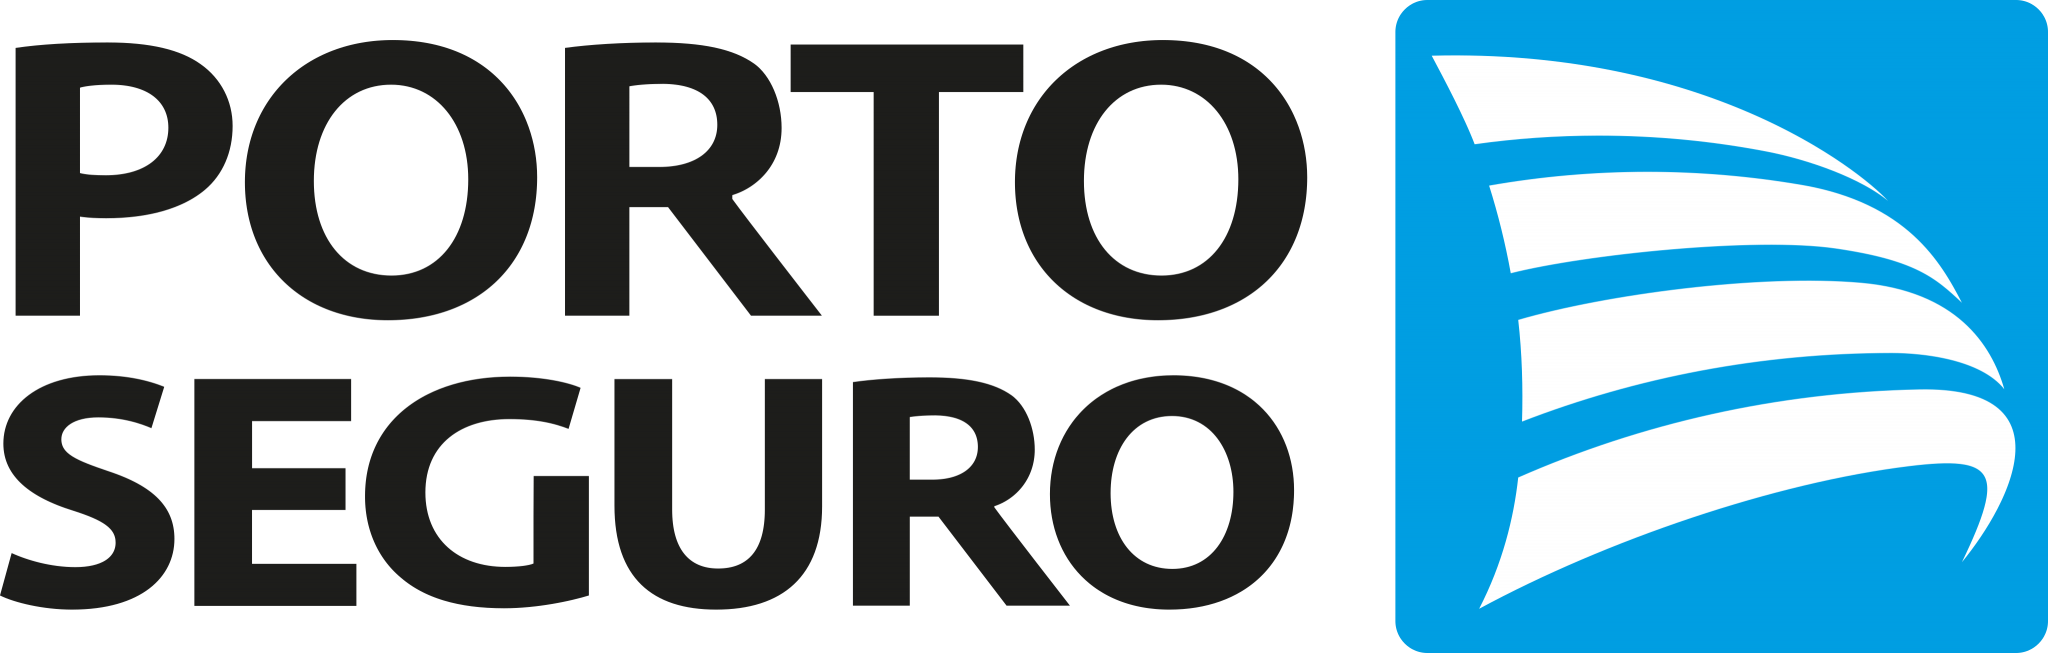 porto-seguro-logo-ok1-3